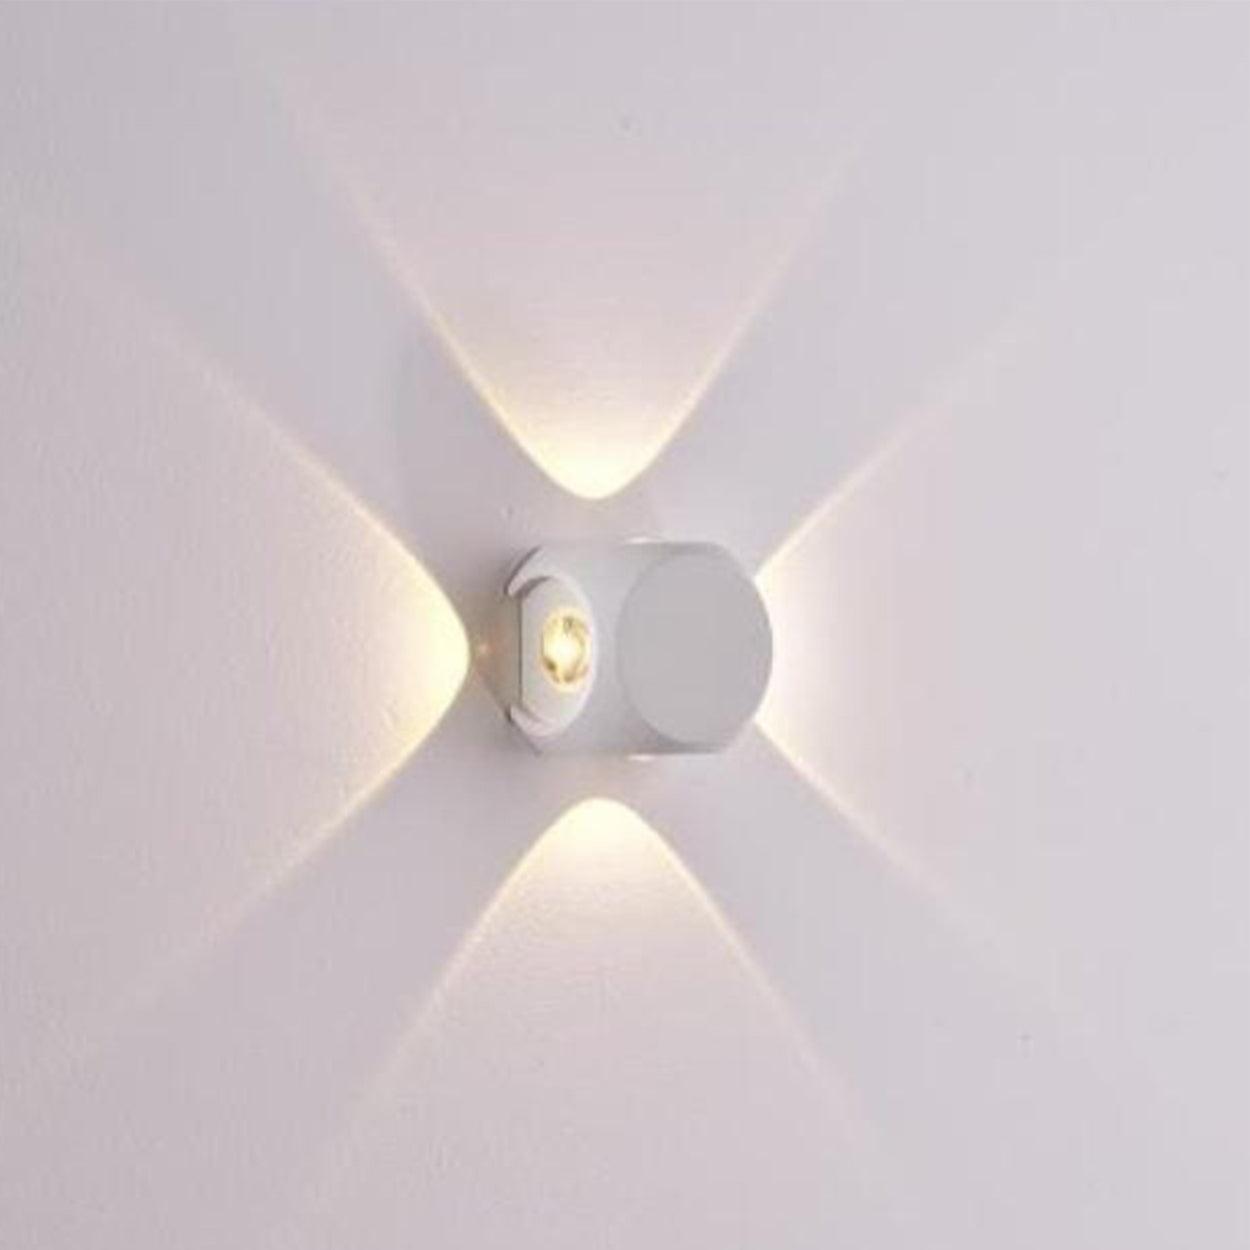 ANKUR COMPATTA CUBO OUTDOOR LED WALL LIGHT - Ankur Lighting